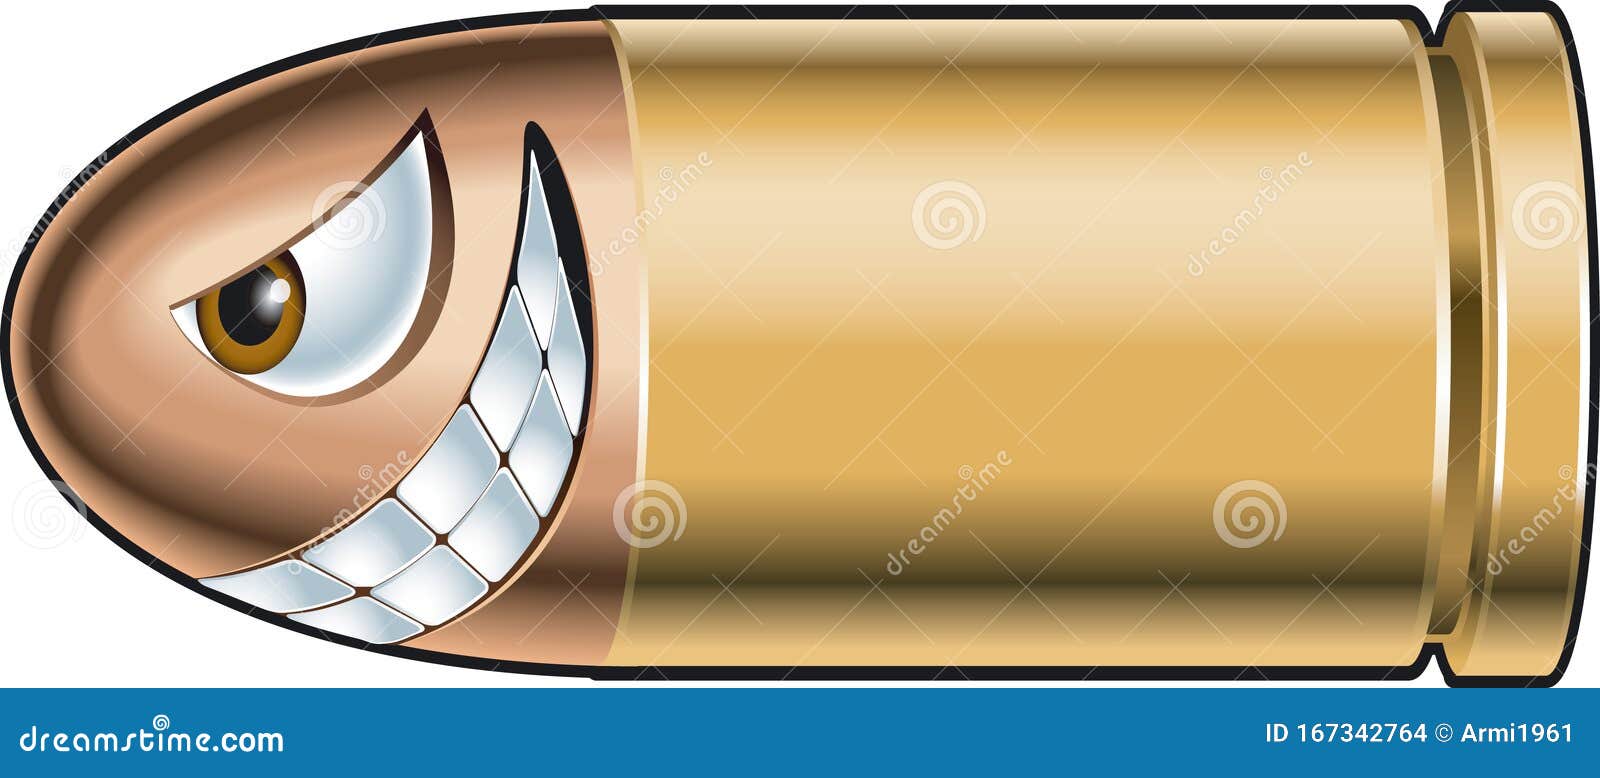 Cartoon gun bullet stock vector. Illustration of cartridge - 167342764